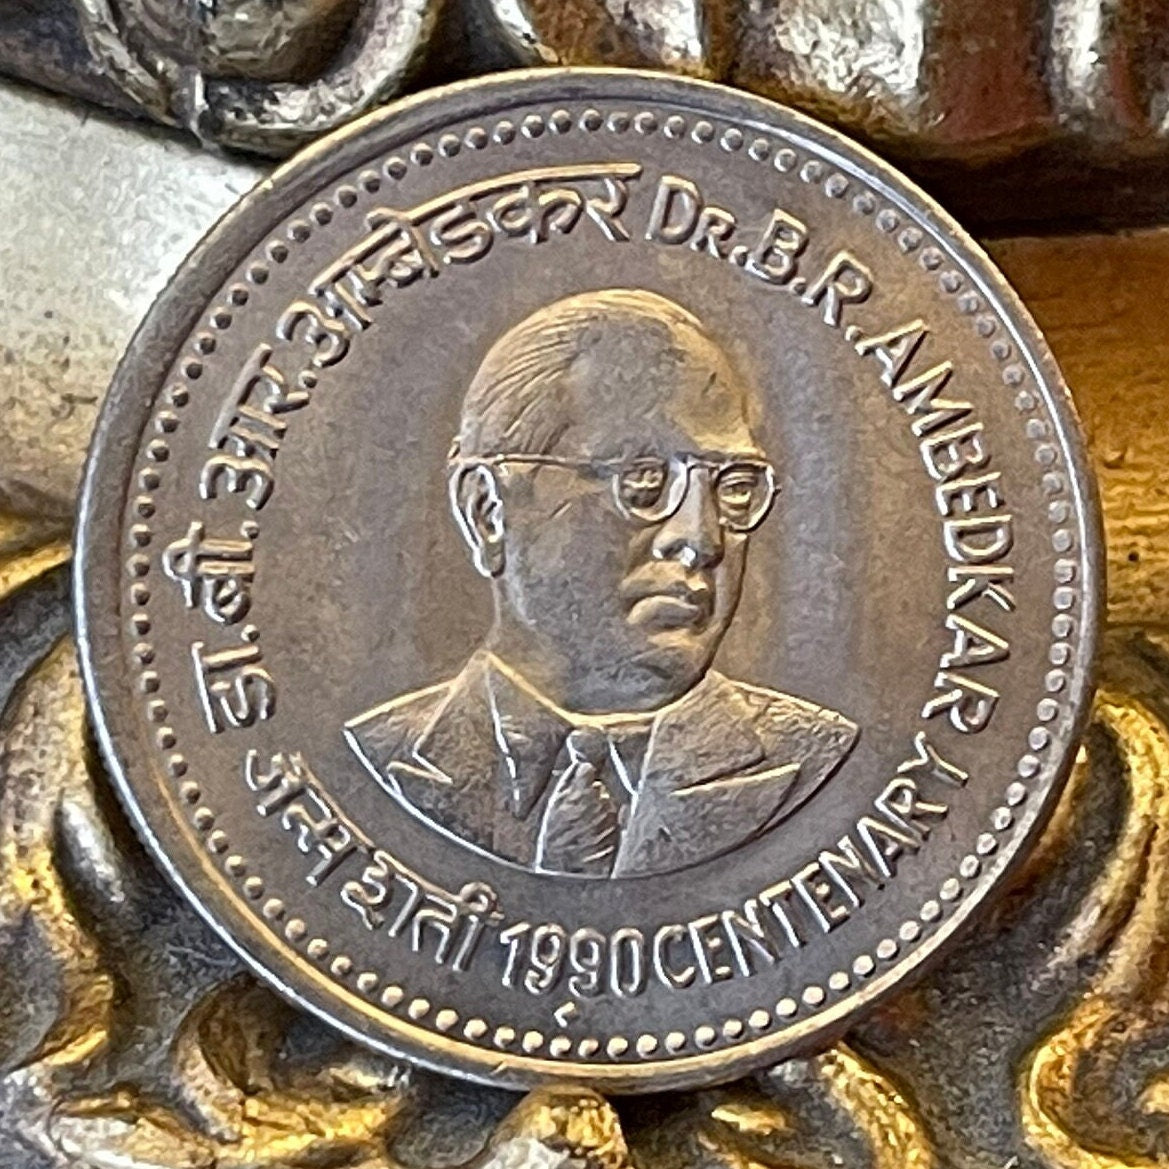 Babasaheb Ambedkar Dalit Buddhist Movement Founder & Ashoka Lion Capitol 1 Rupee India Authentic Coin Money for Jewelry (Social Reformer)